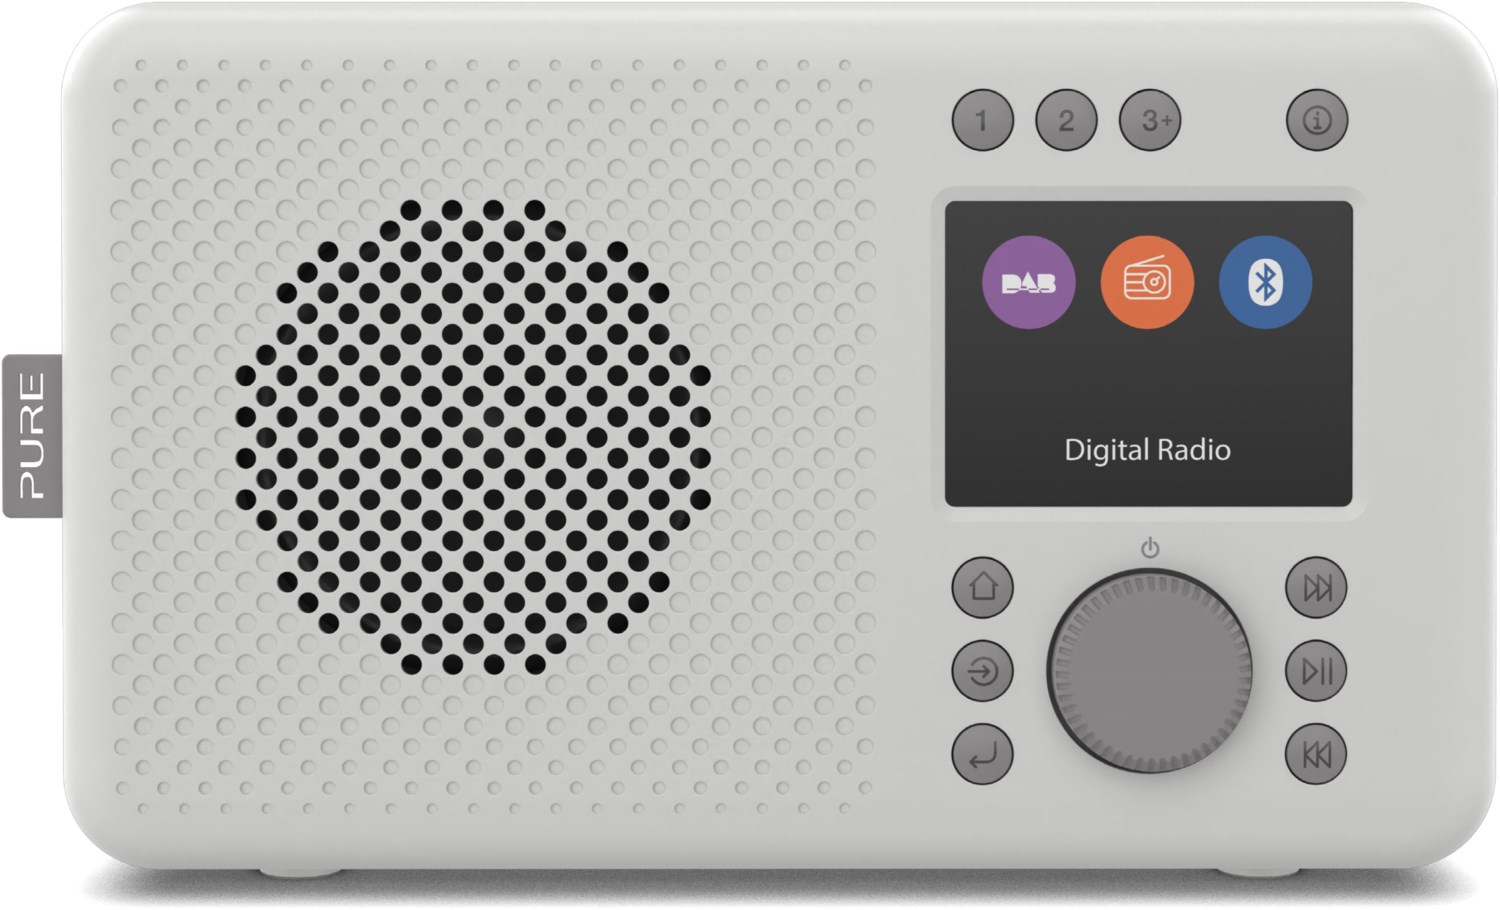 Pure Elan Dab+ Tragbares Dab-radio Mit Bluetooth 5.0 (dab/dab+ Und Ukw-radio, Tf